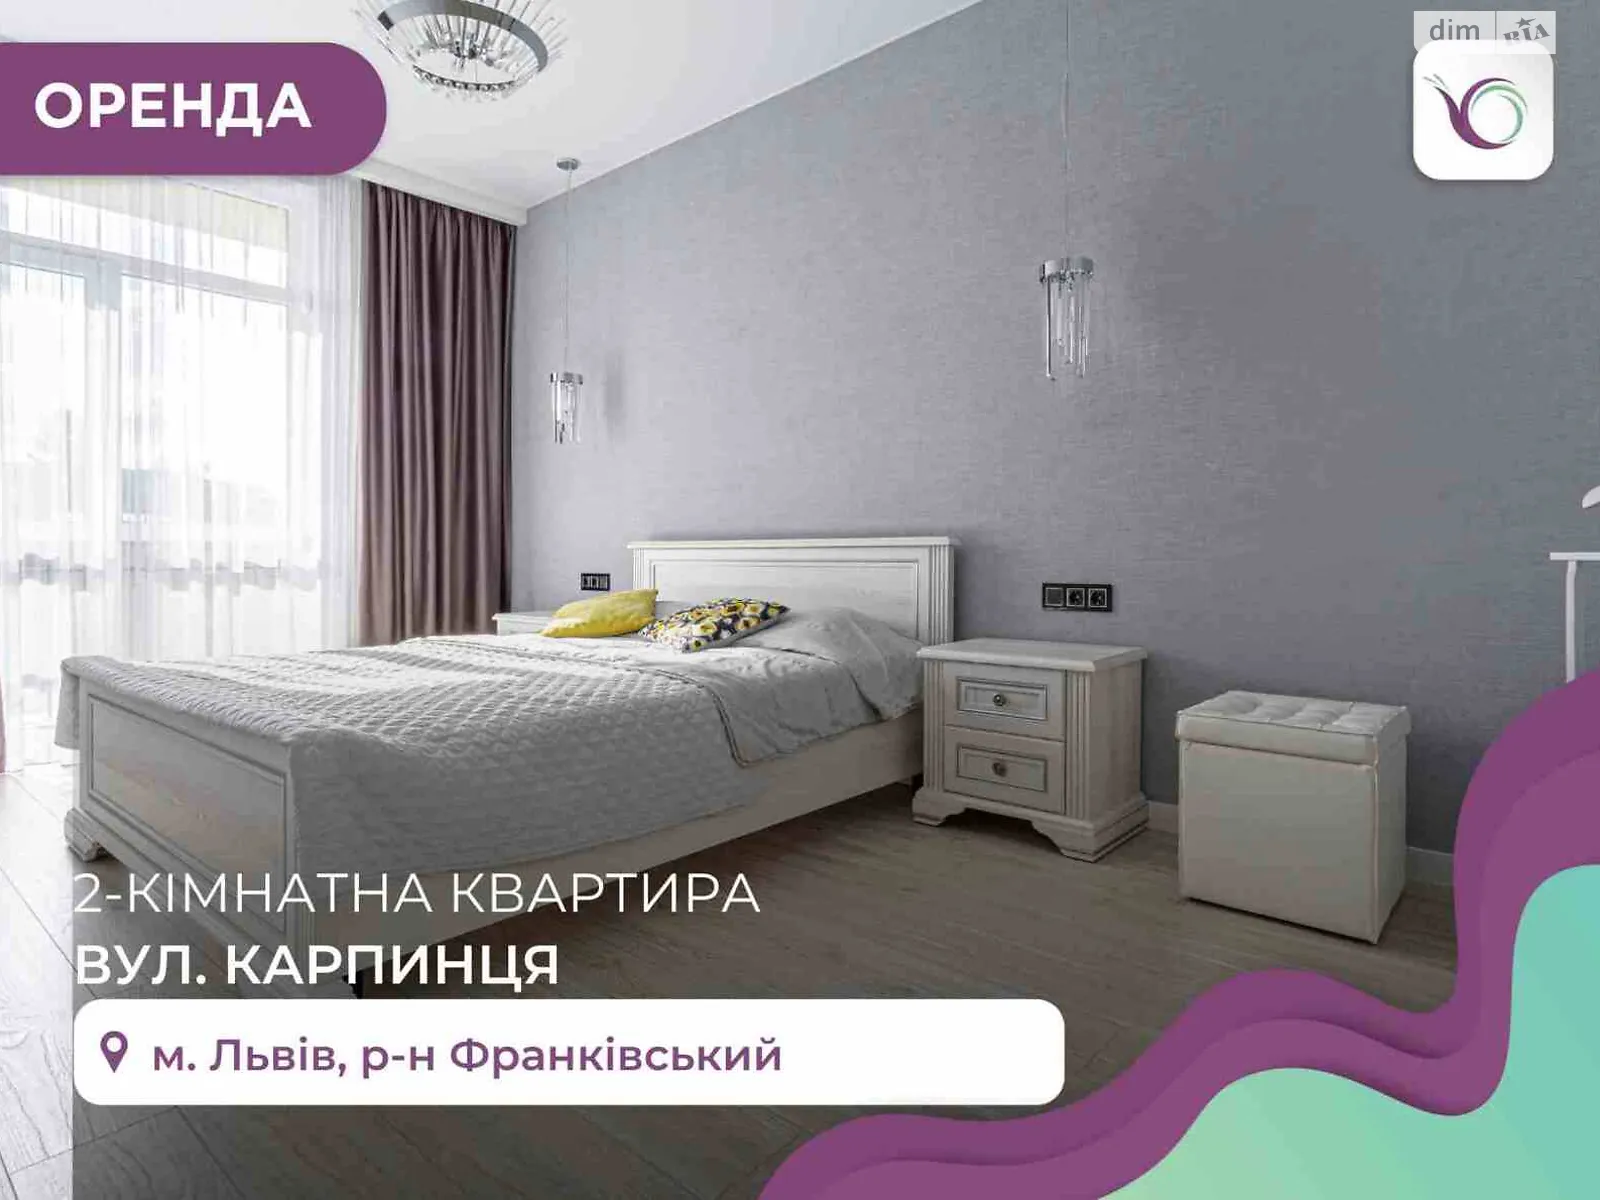 Сдается в аренду 2-комнатная квартира 75 кв. м в Львове, ул. Карпинца Ивана - фото 1